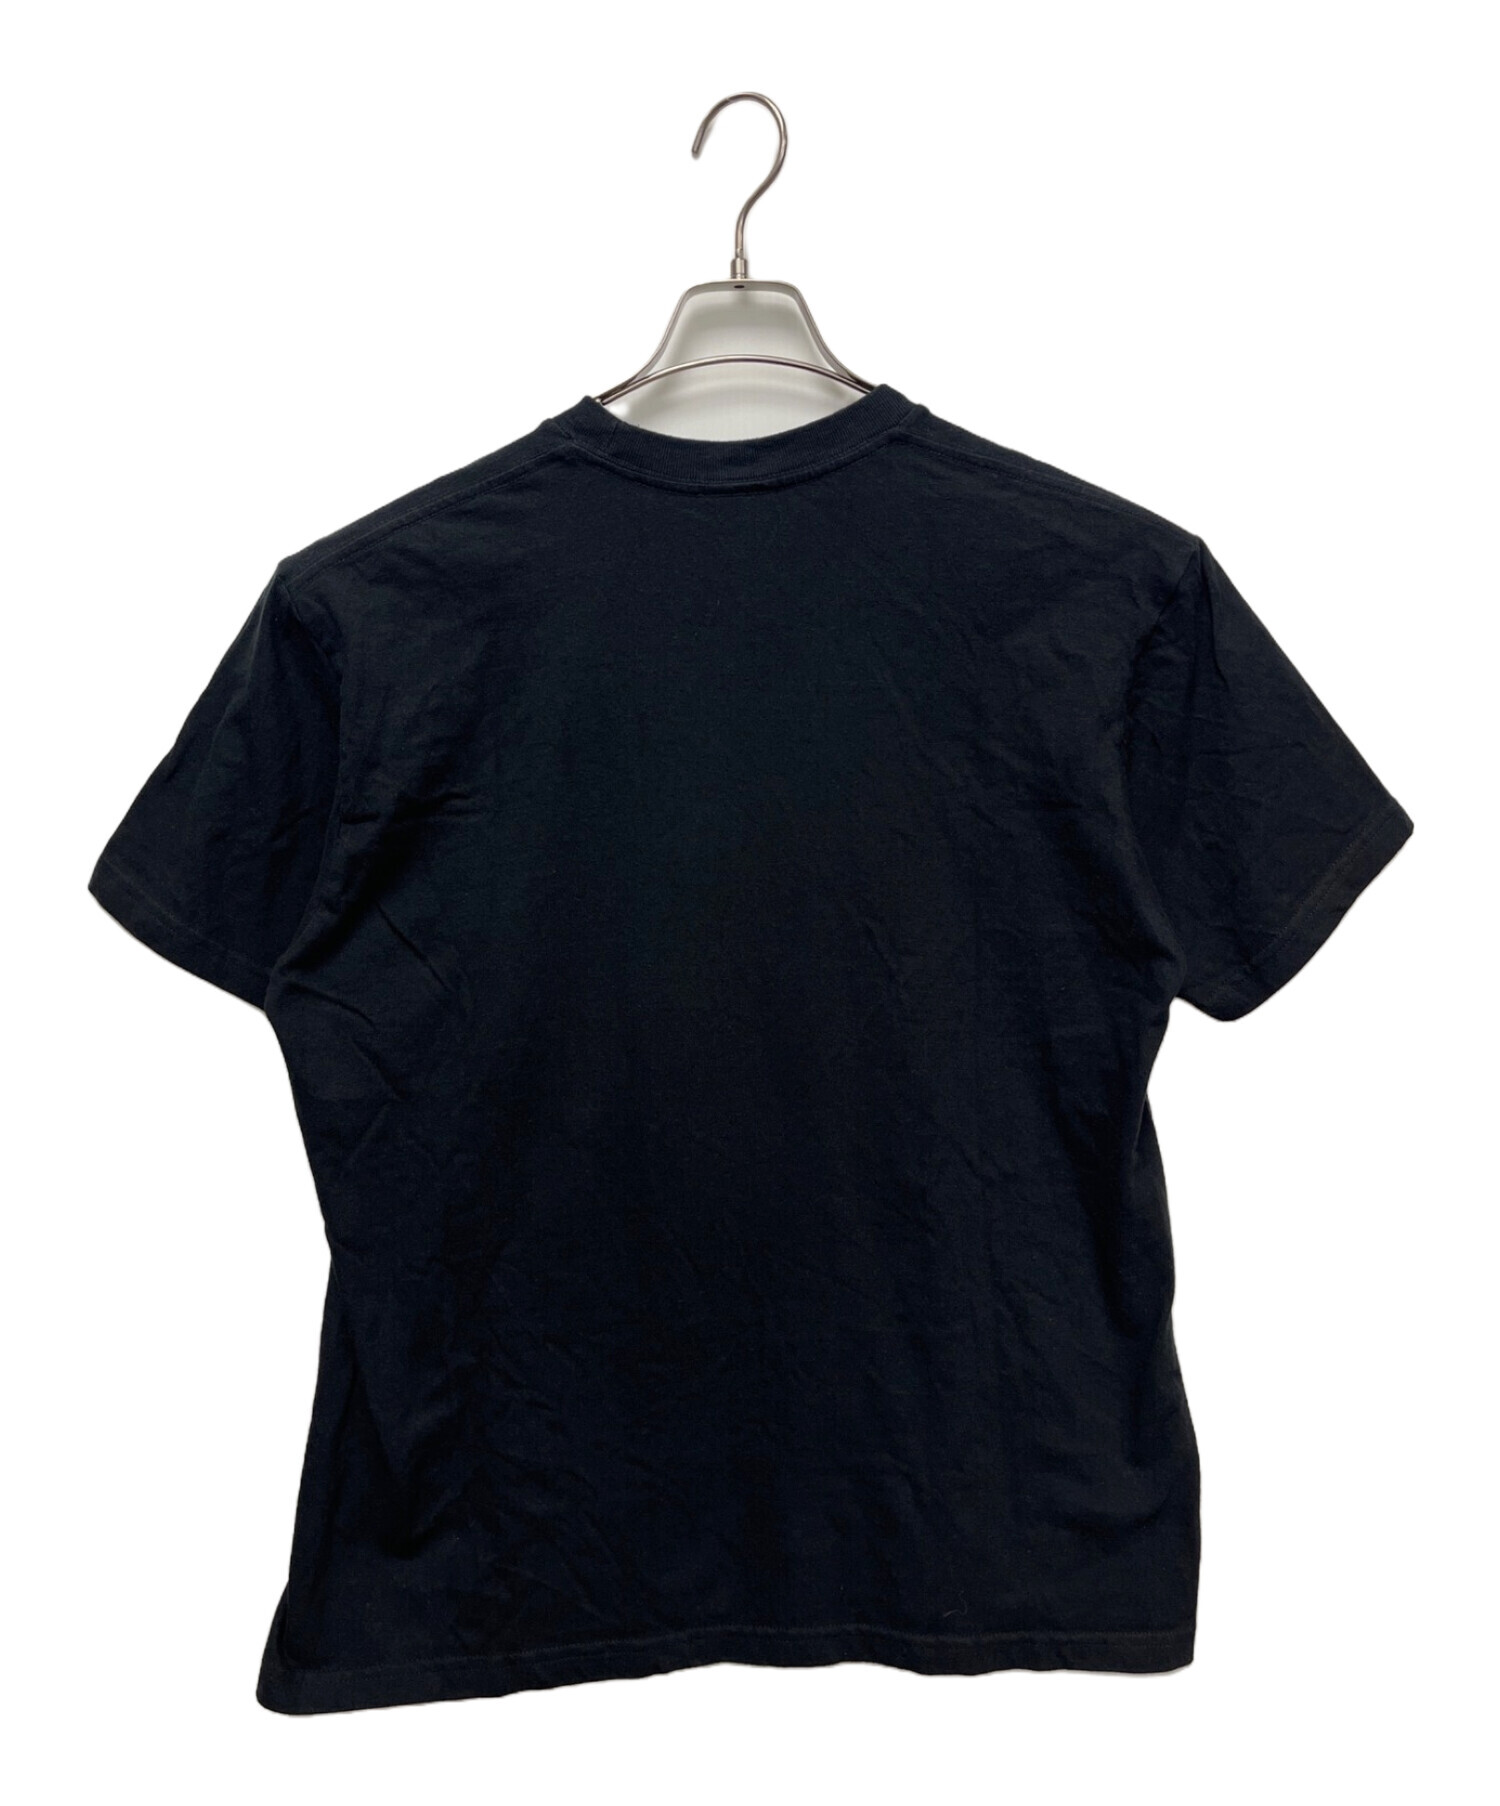 Supreme (シュプリーム) Tシャツ ブラック サイズ:M